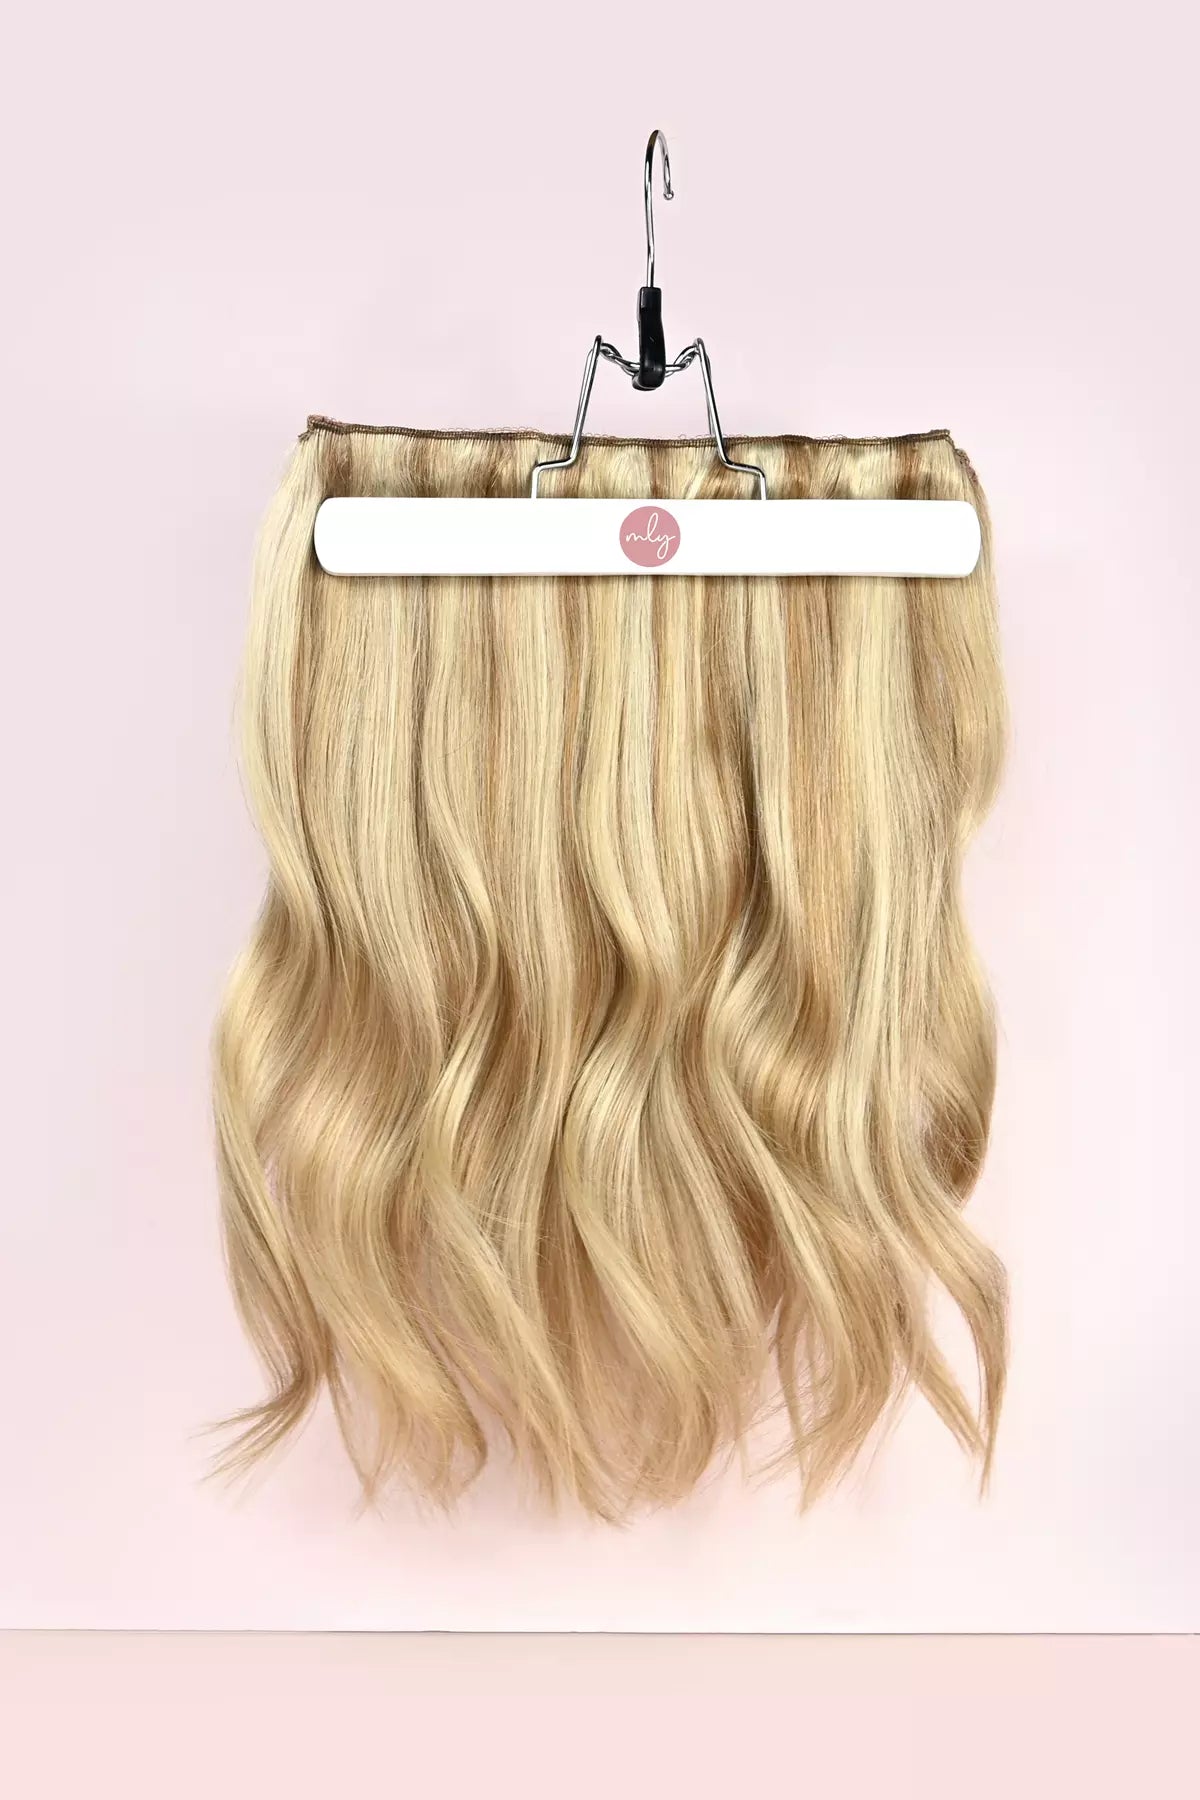 Licht blonde highlights clip-in hairextensions ☀️ 50cm - 300g